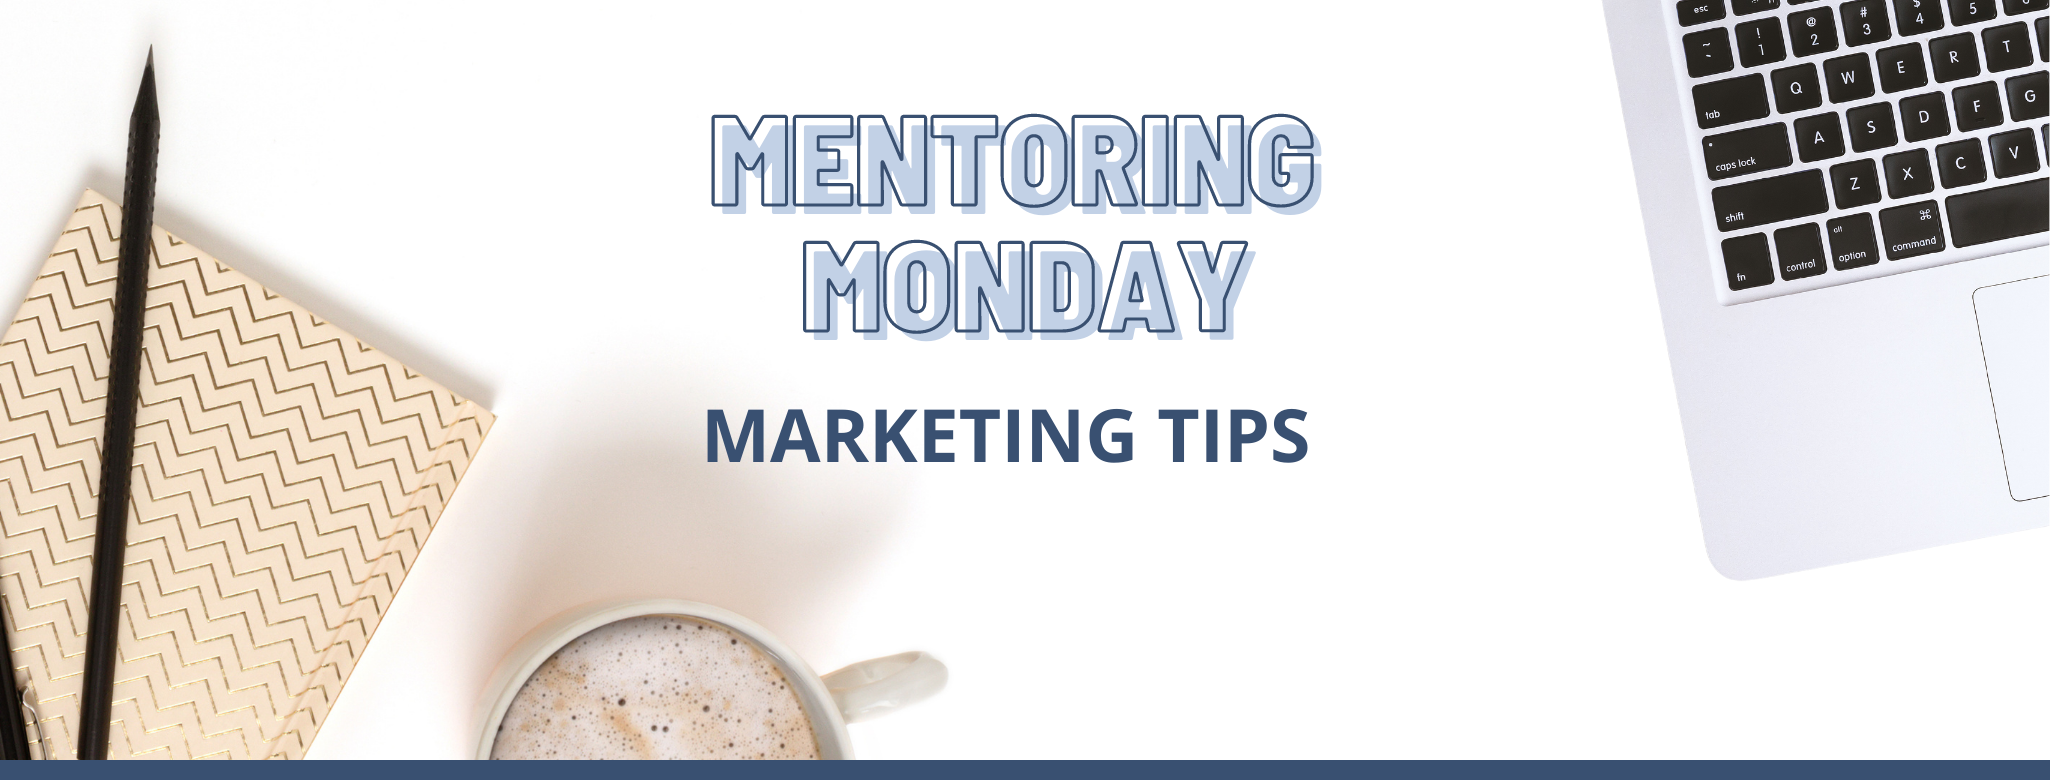 Mentoring Monday Marketing Tips